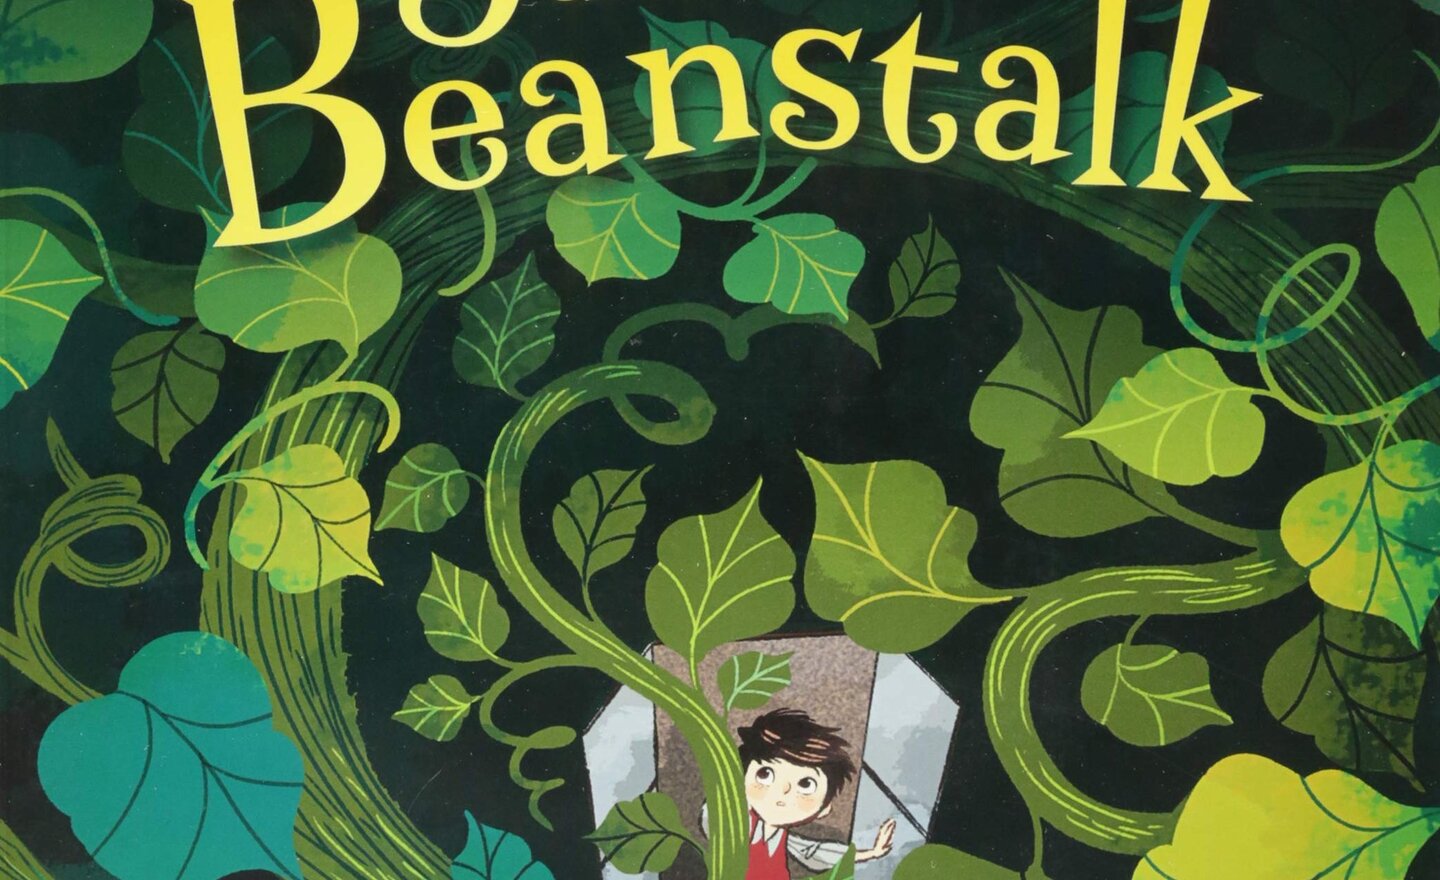 Image of Jack & The Beanstalk